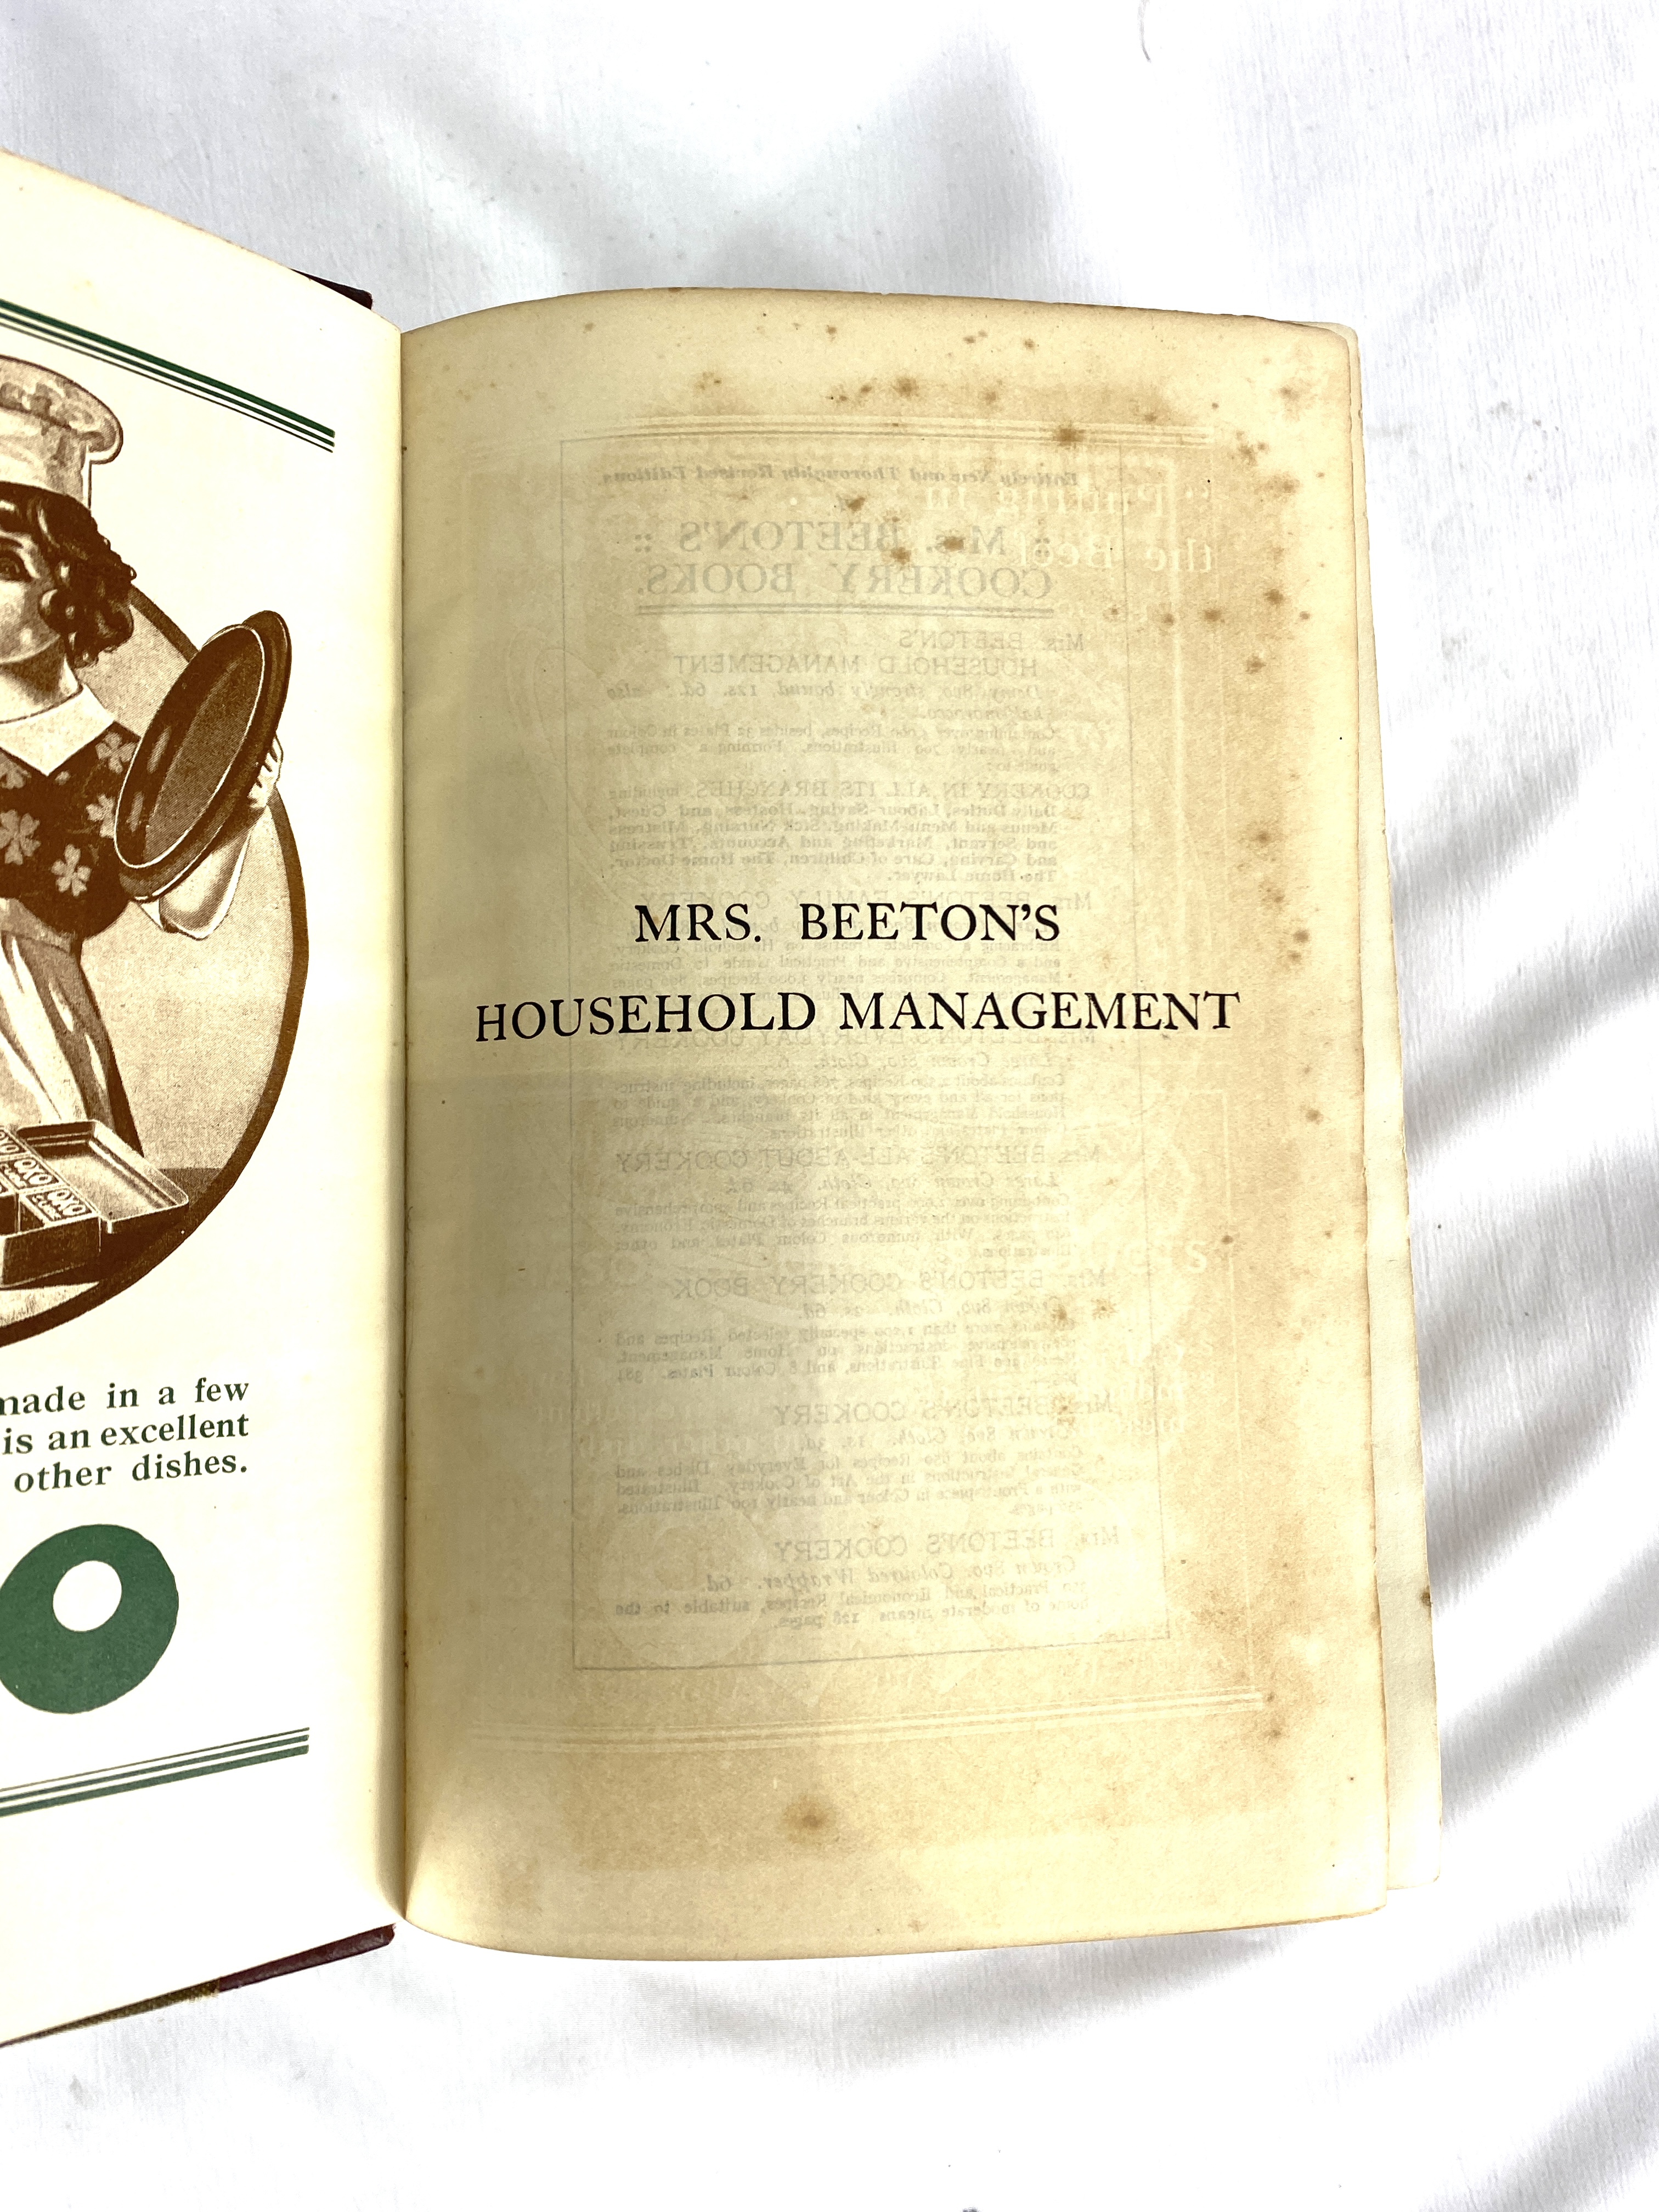 Mrs Beeton's Household Management - Image 5 of 5